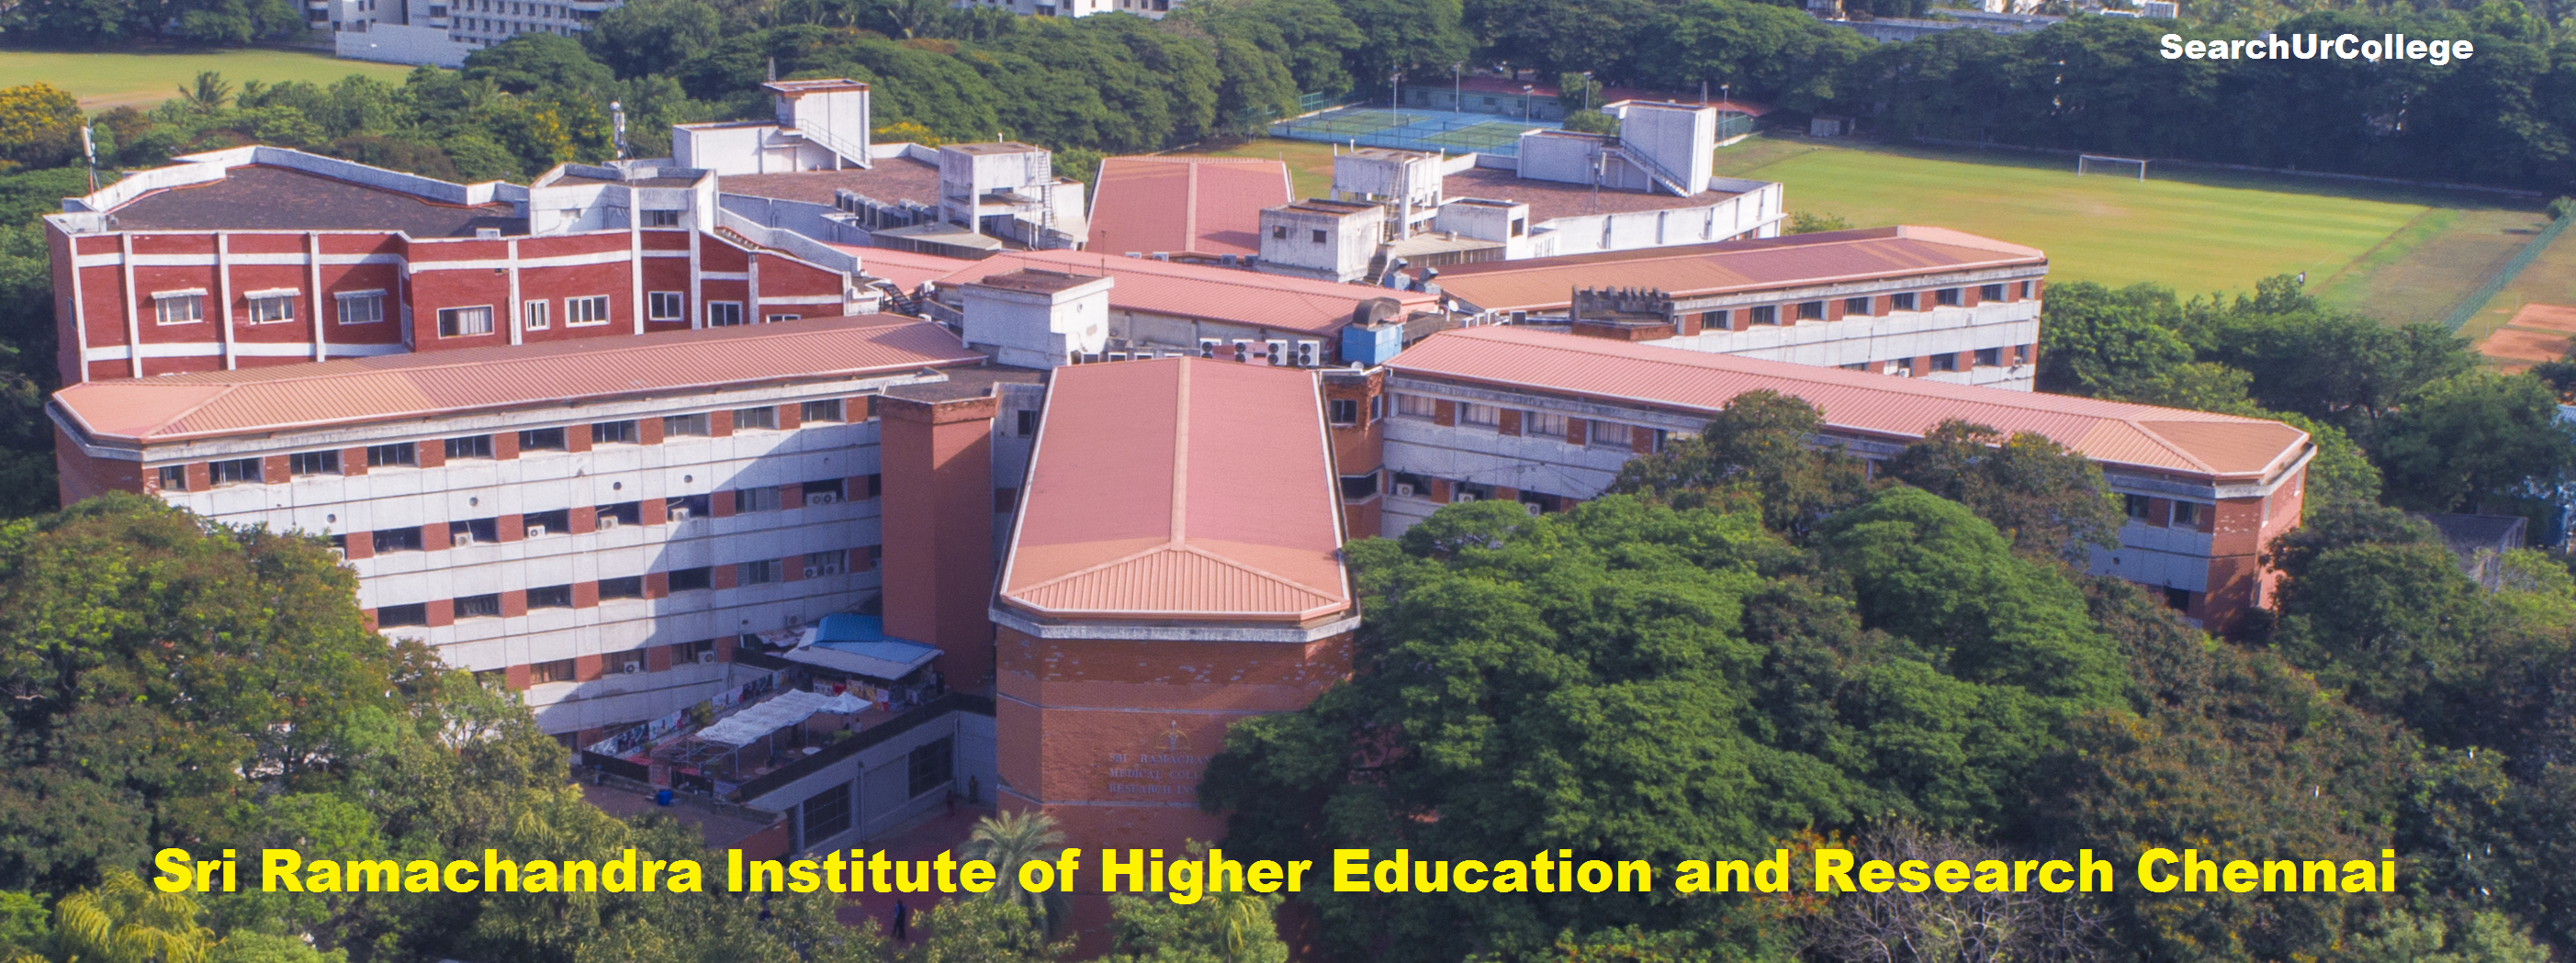 Sri Ramachandra Institute of Higher Education and Research Chennai